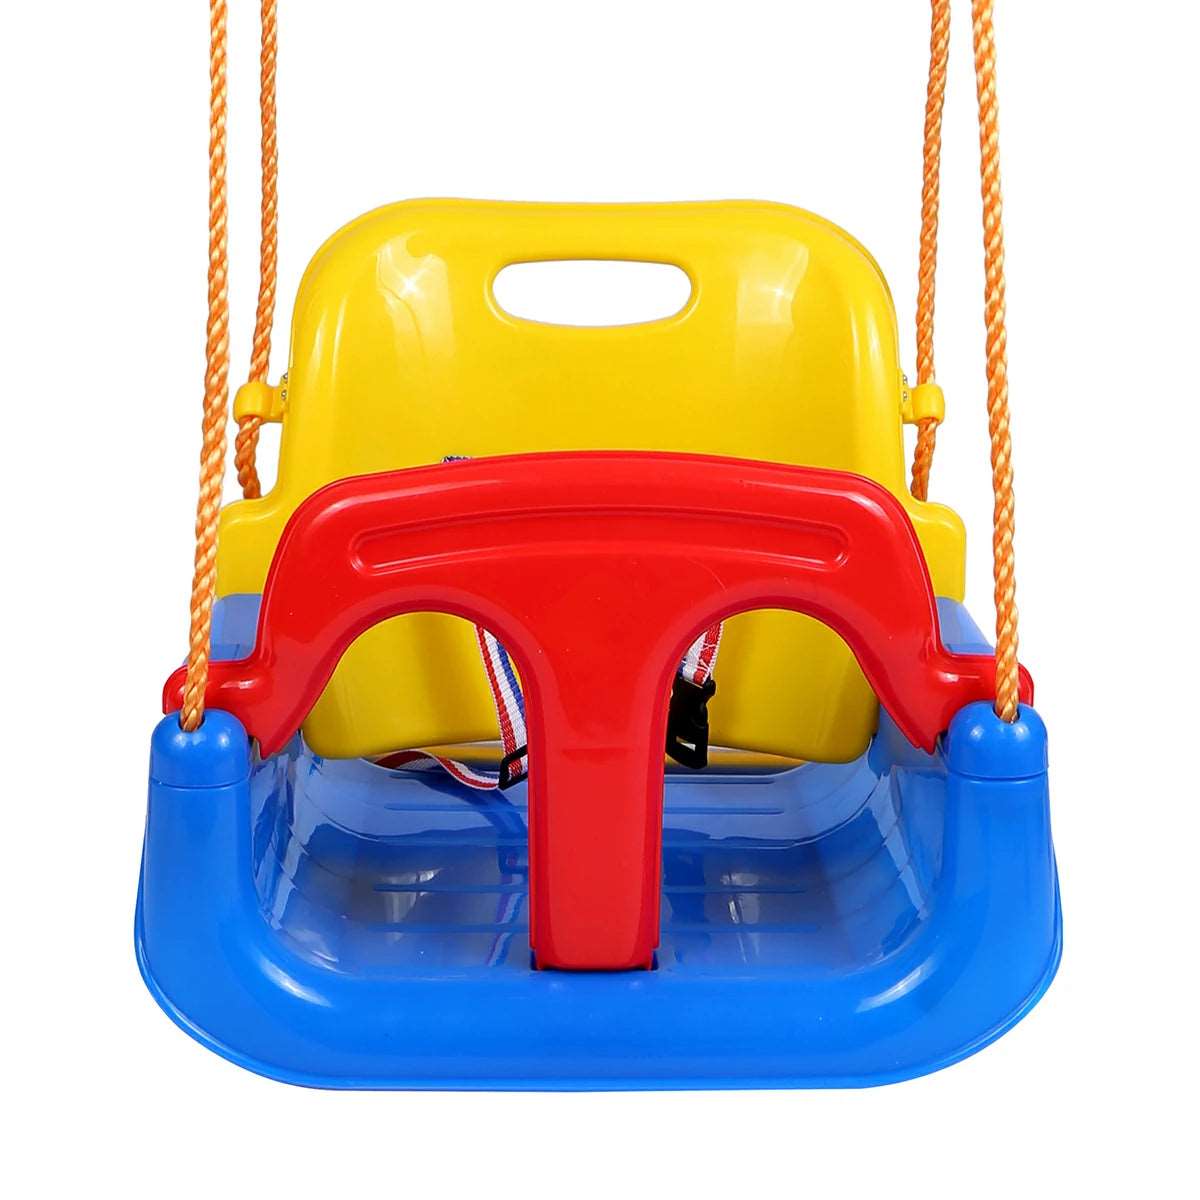 3-in-1 Baby Swing Seat, Toddler Swing